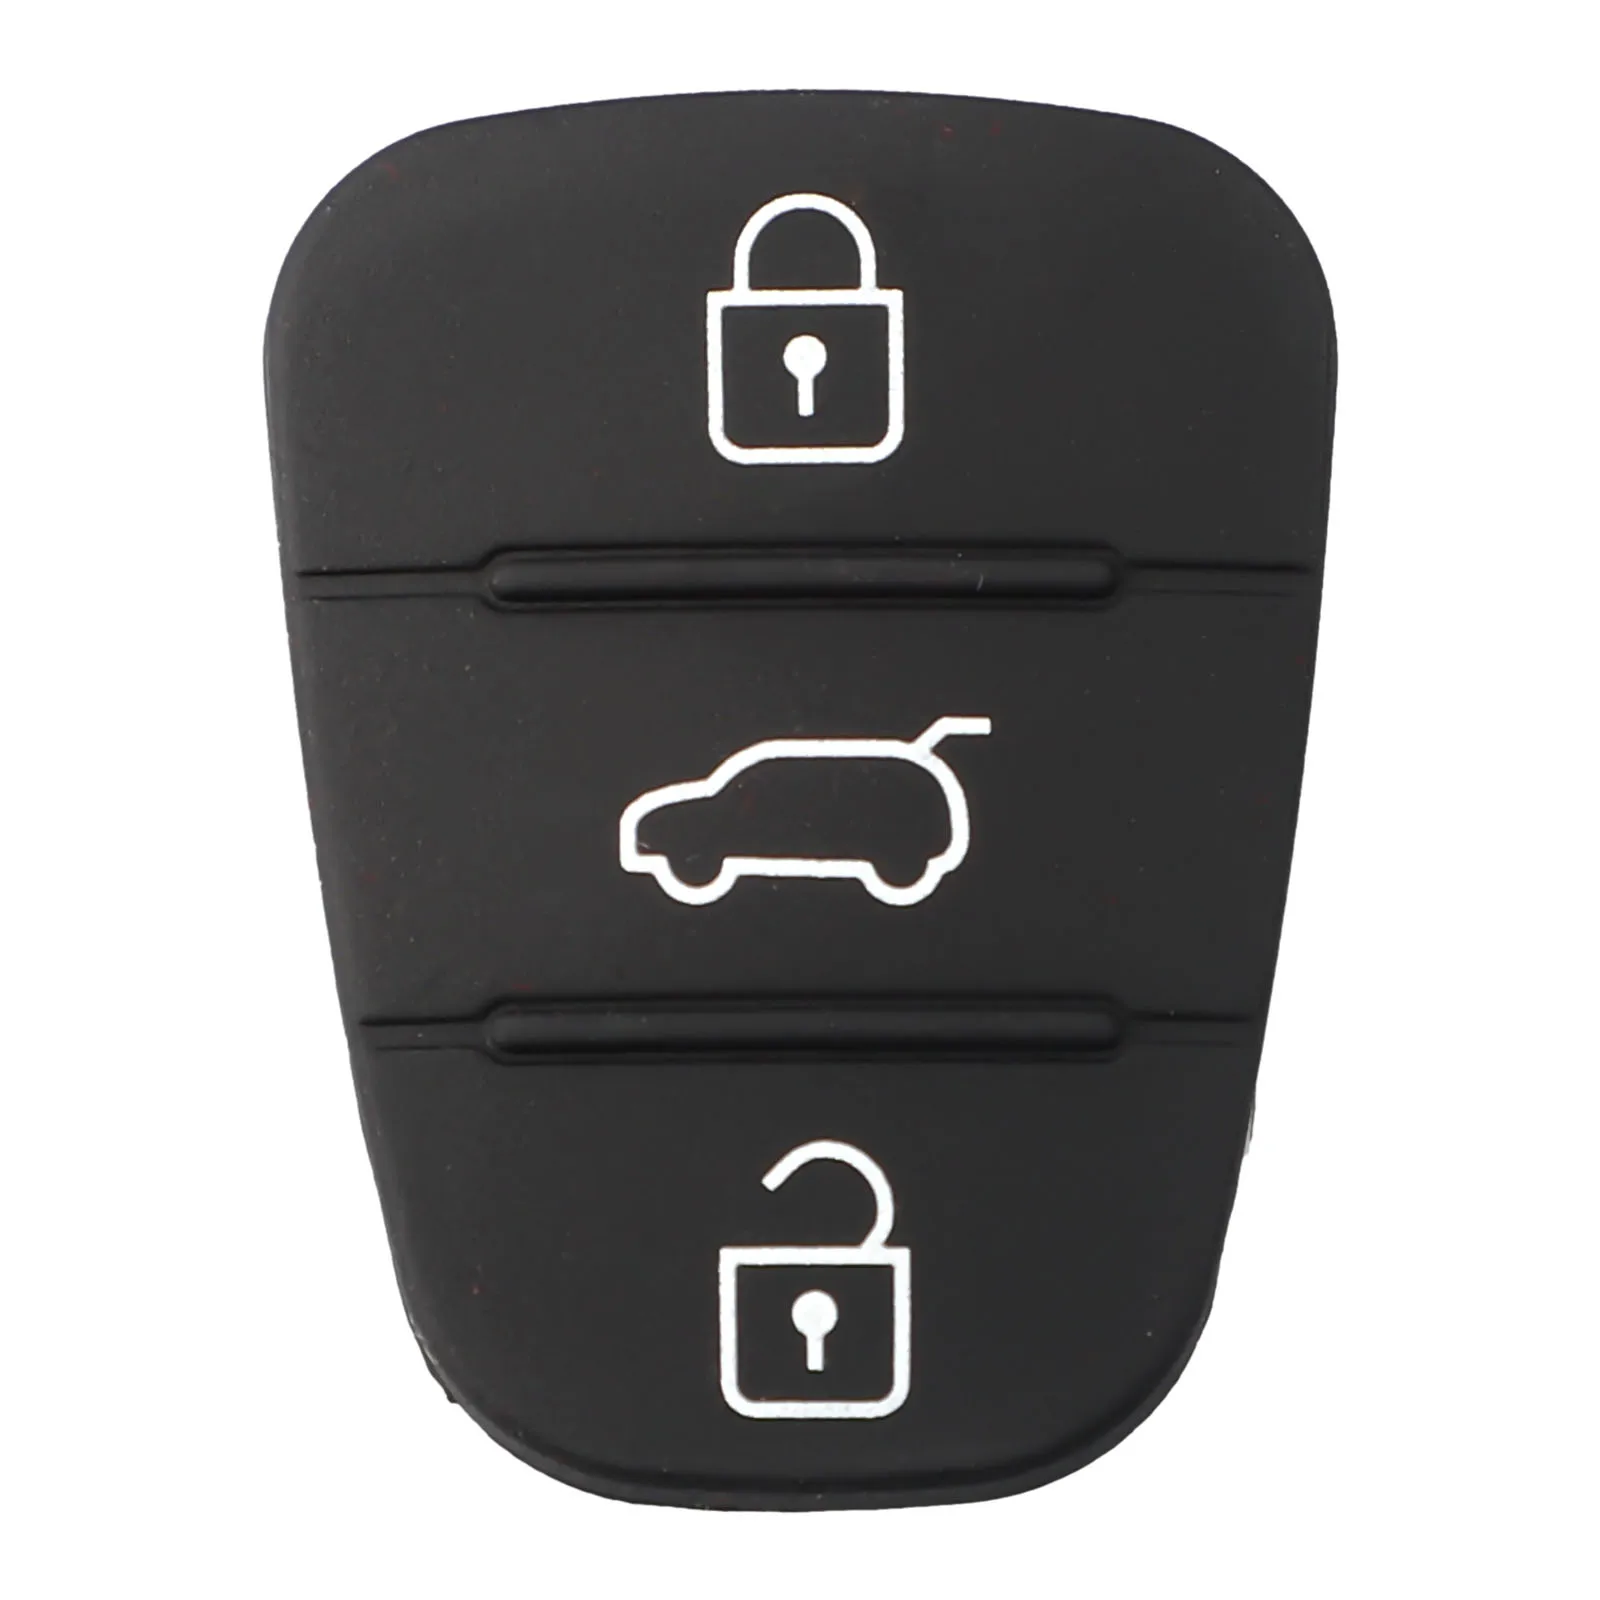 

2pcs 3 Buttons Remote Car Key Shell Fob Rubber Pad Black For Hyundai I10 I20 I30 For KIA 2012 Remote Car Key Fob Case Cover